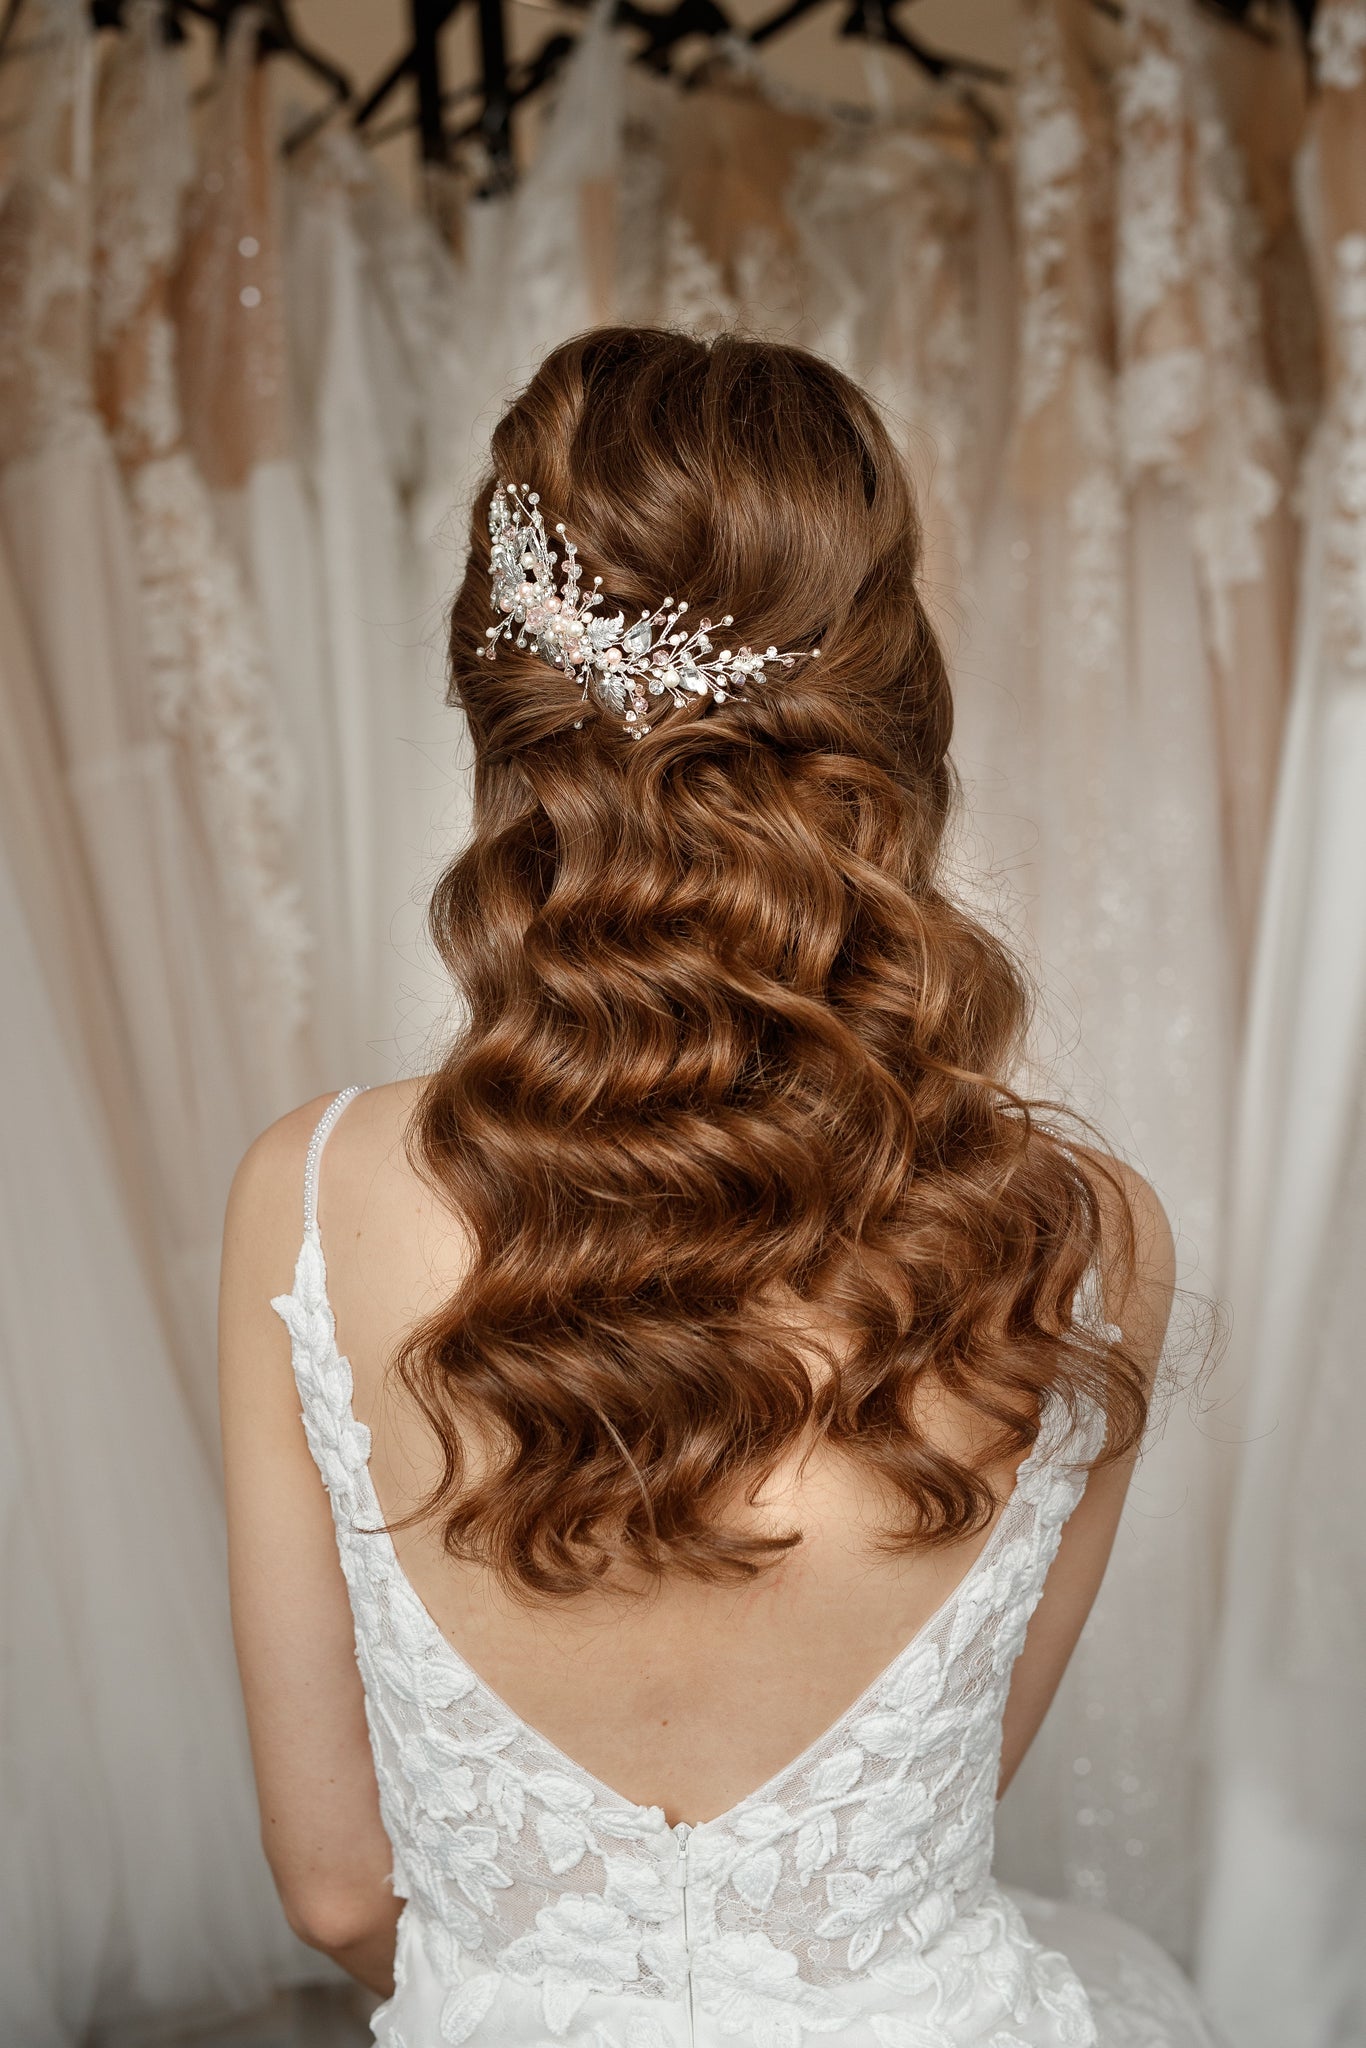 Rustic wedding hair comb